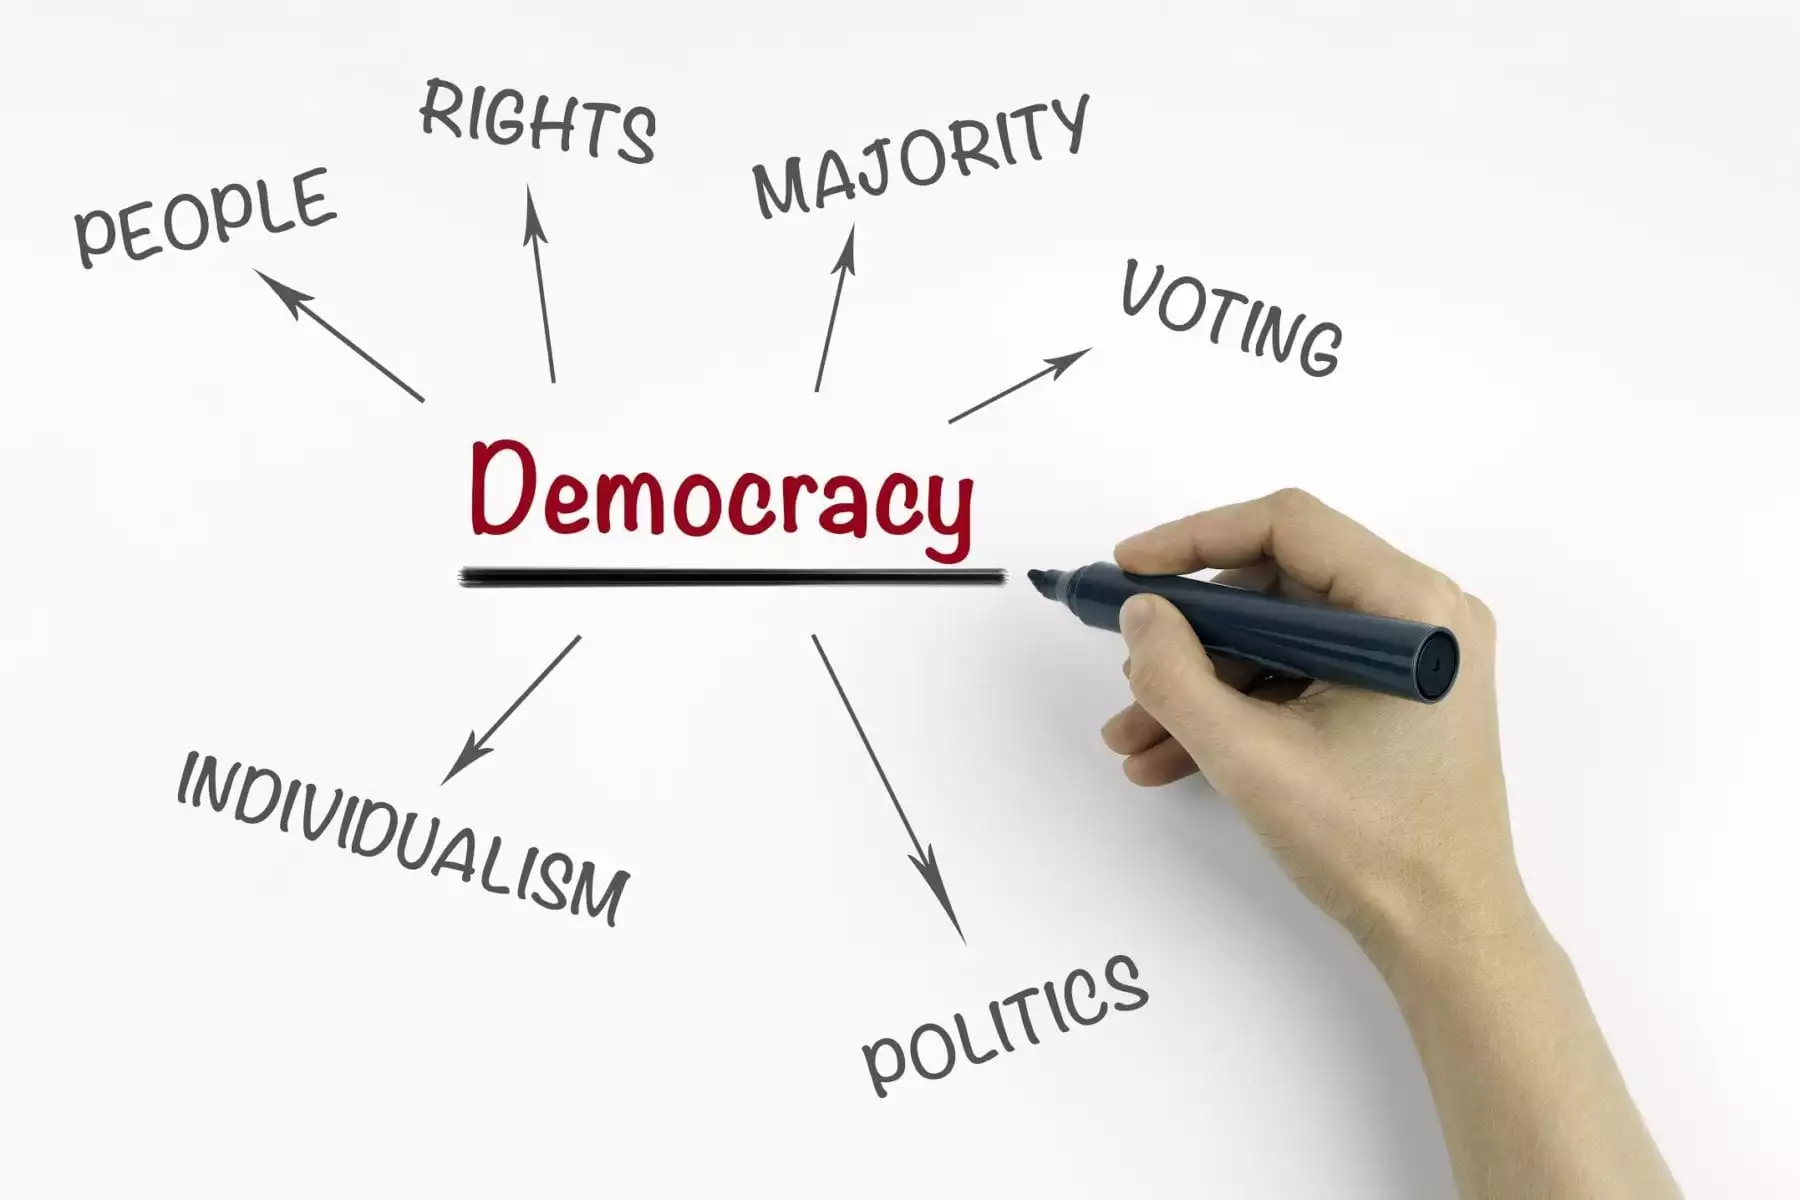 "Democracy" written by hand on white paper. Image: Shutterstock via Giles Pegram